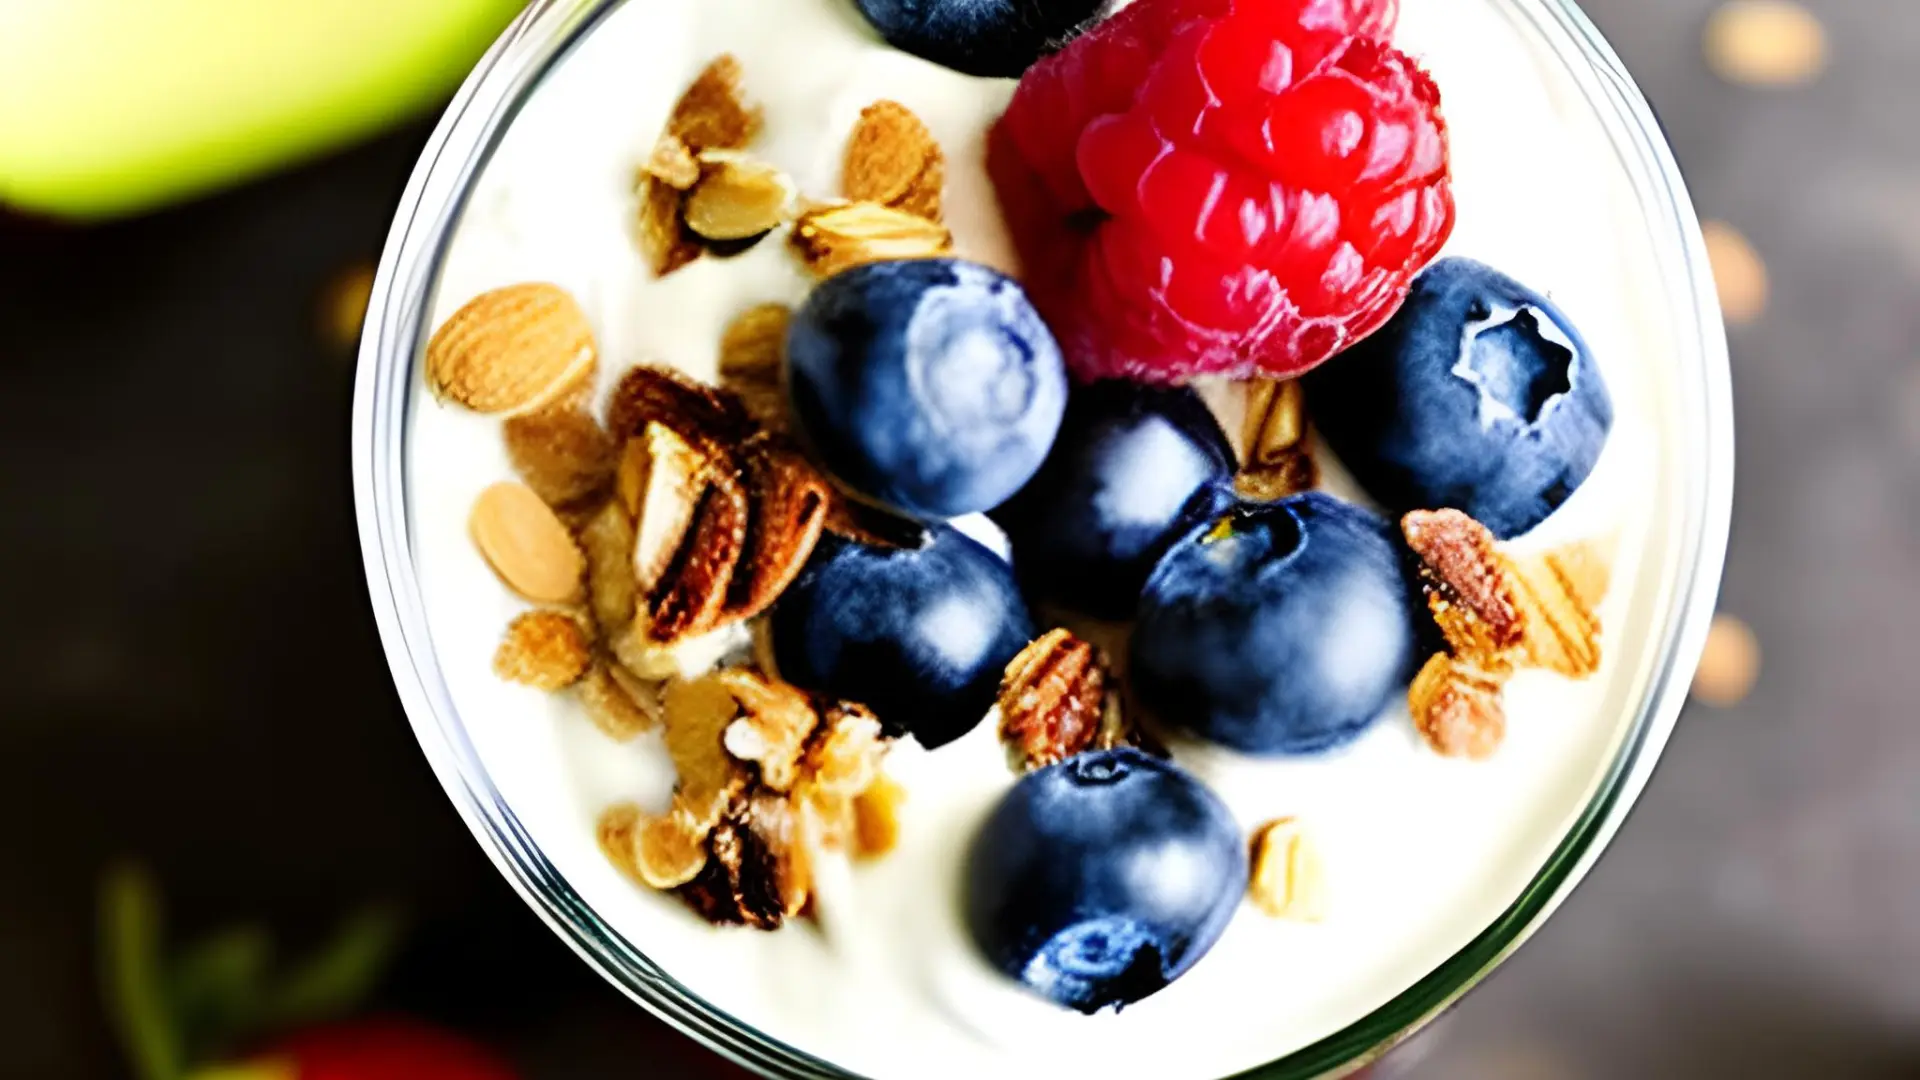 Greek Yogurt Parfait with Berries and Granola